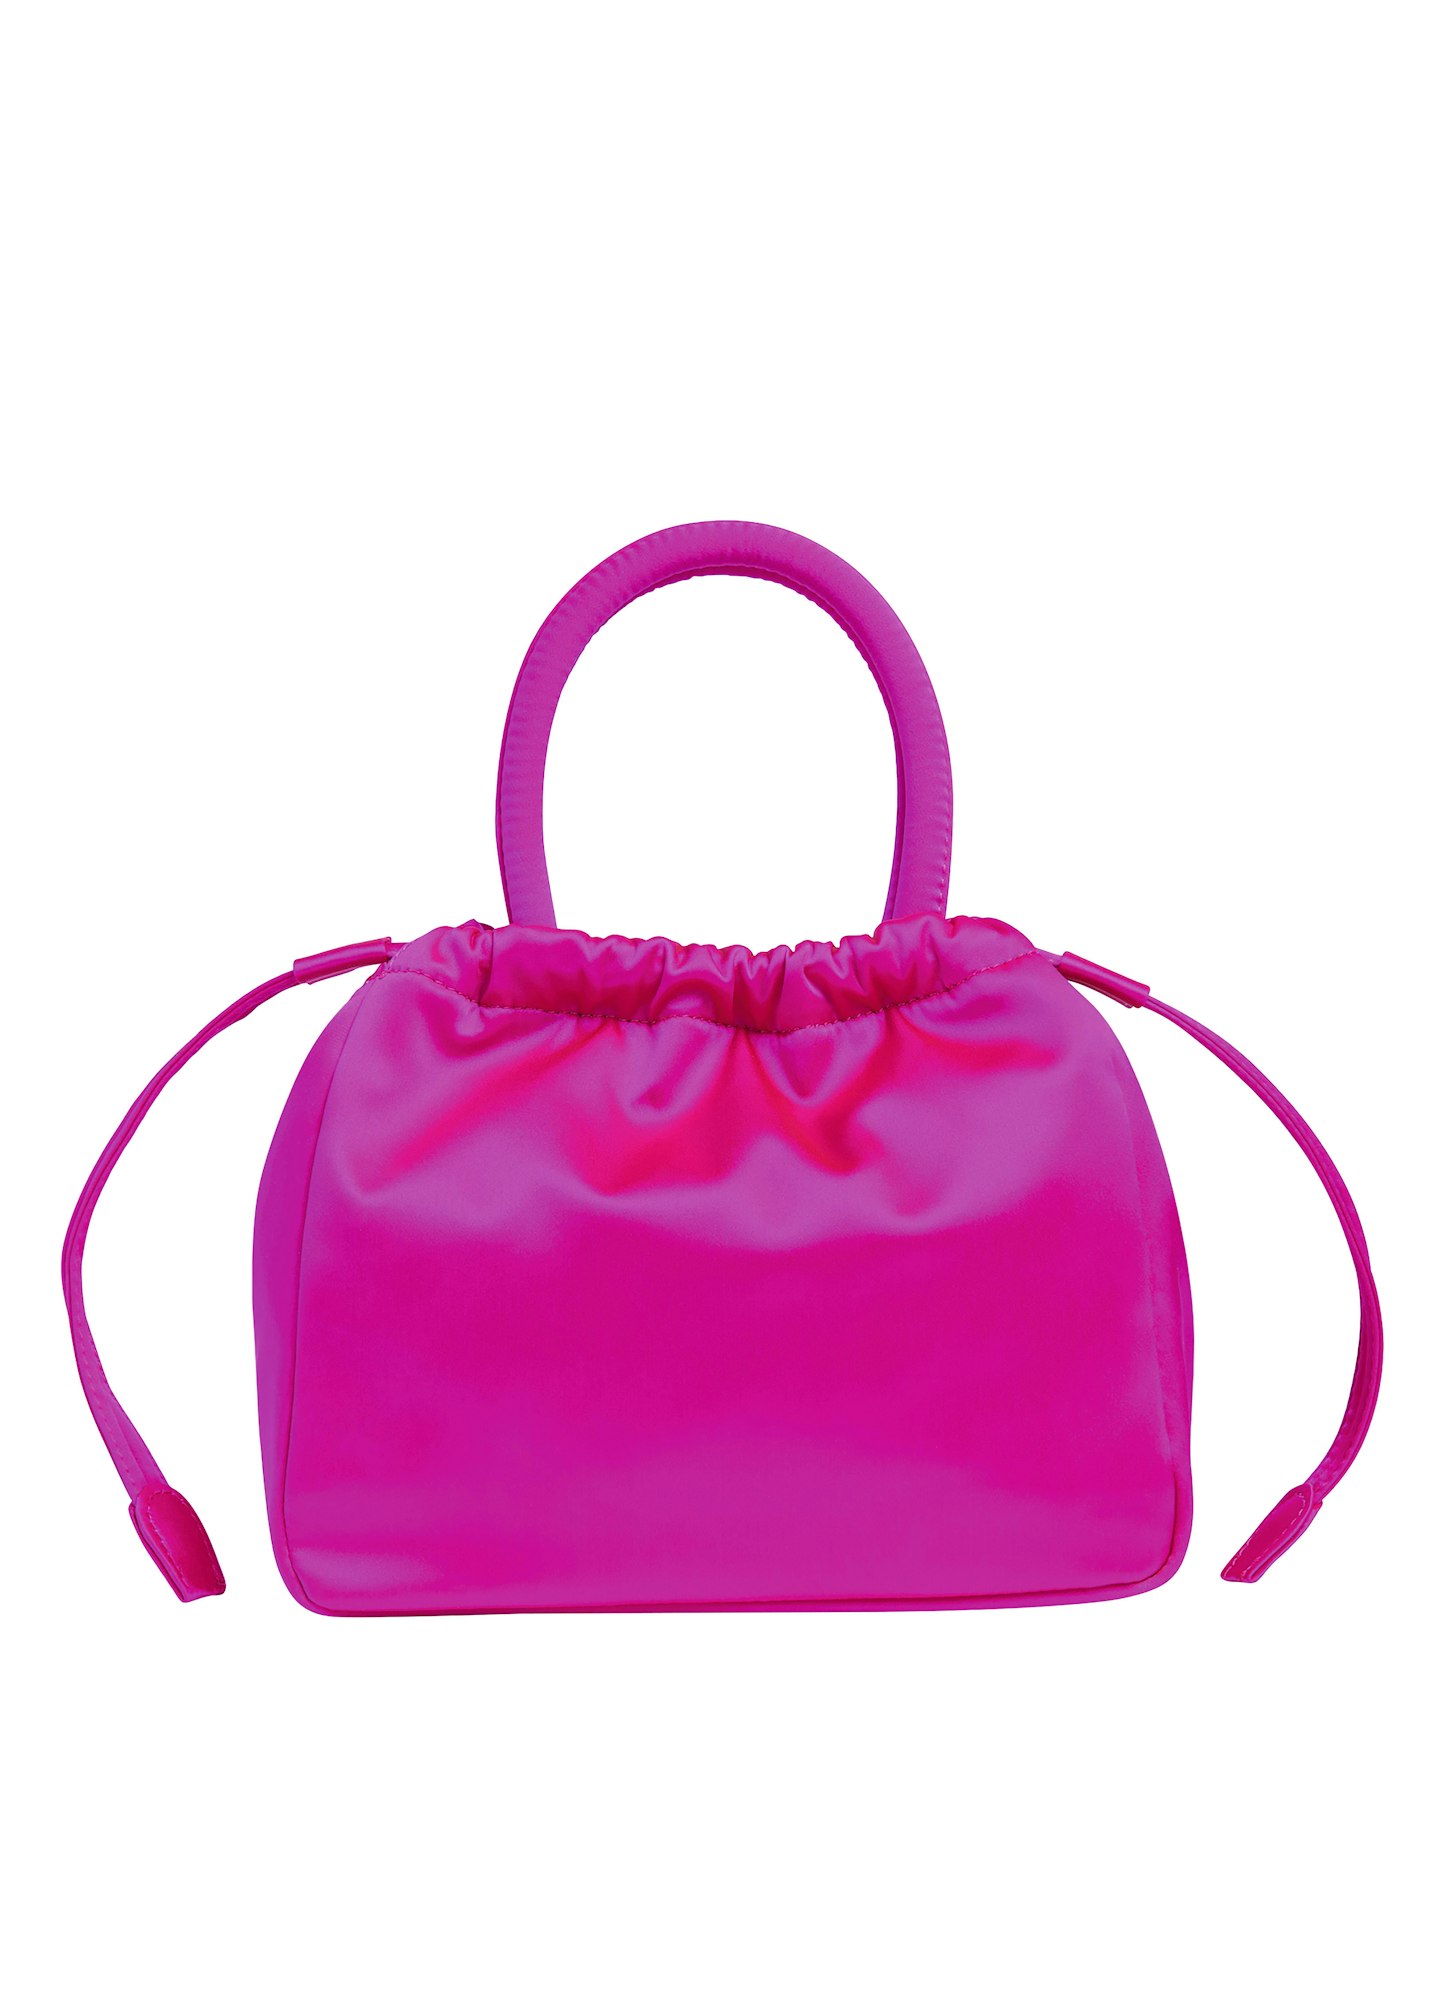 Whistles x Hai Collaboration  Elsie Bag in Pink, £108